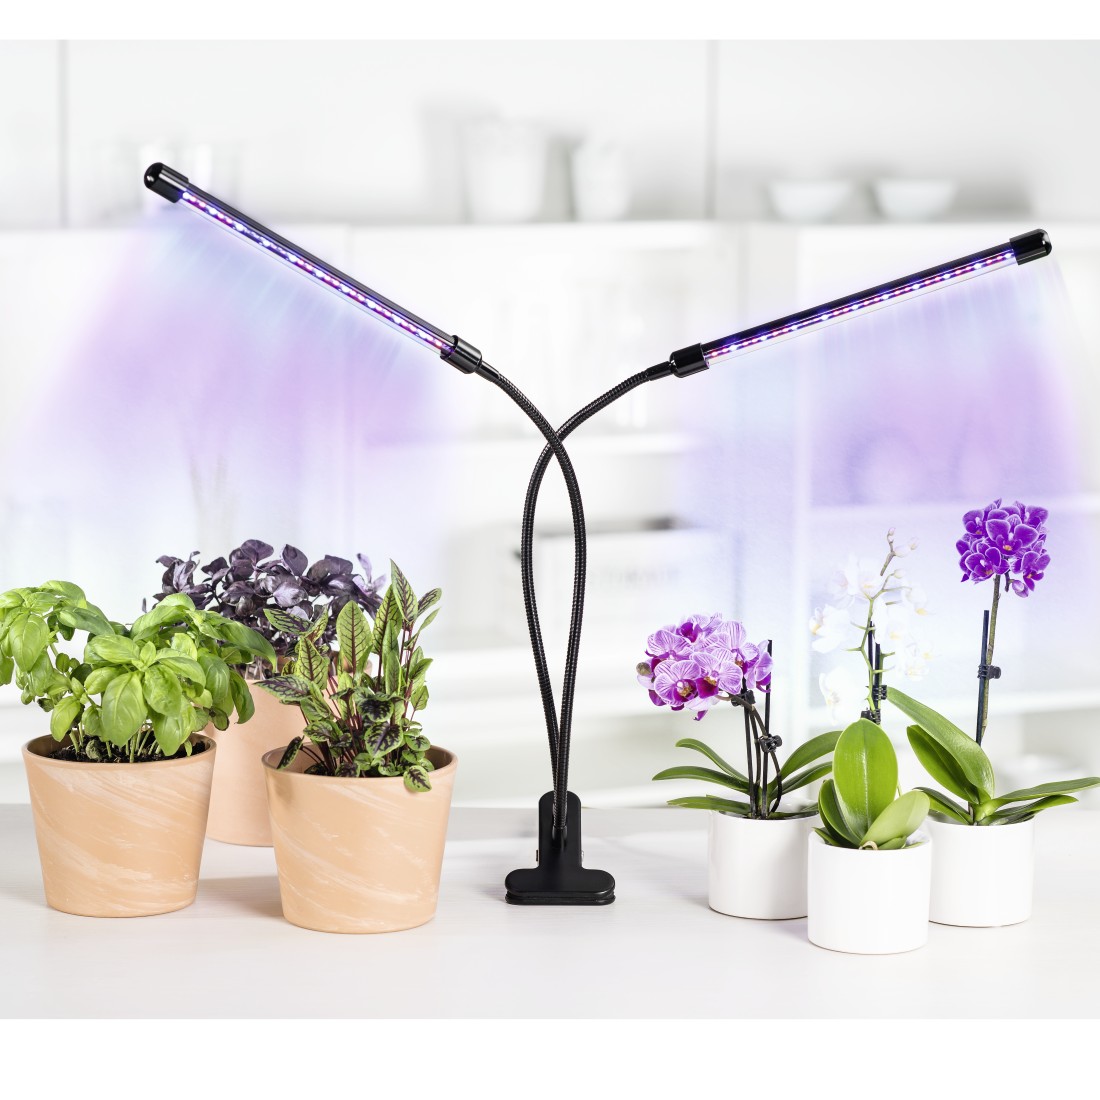 awx5 Druckfähige Anwendung 5 - Xavax, LED-Pflanzenleuchte Stick